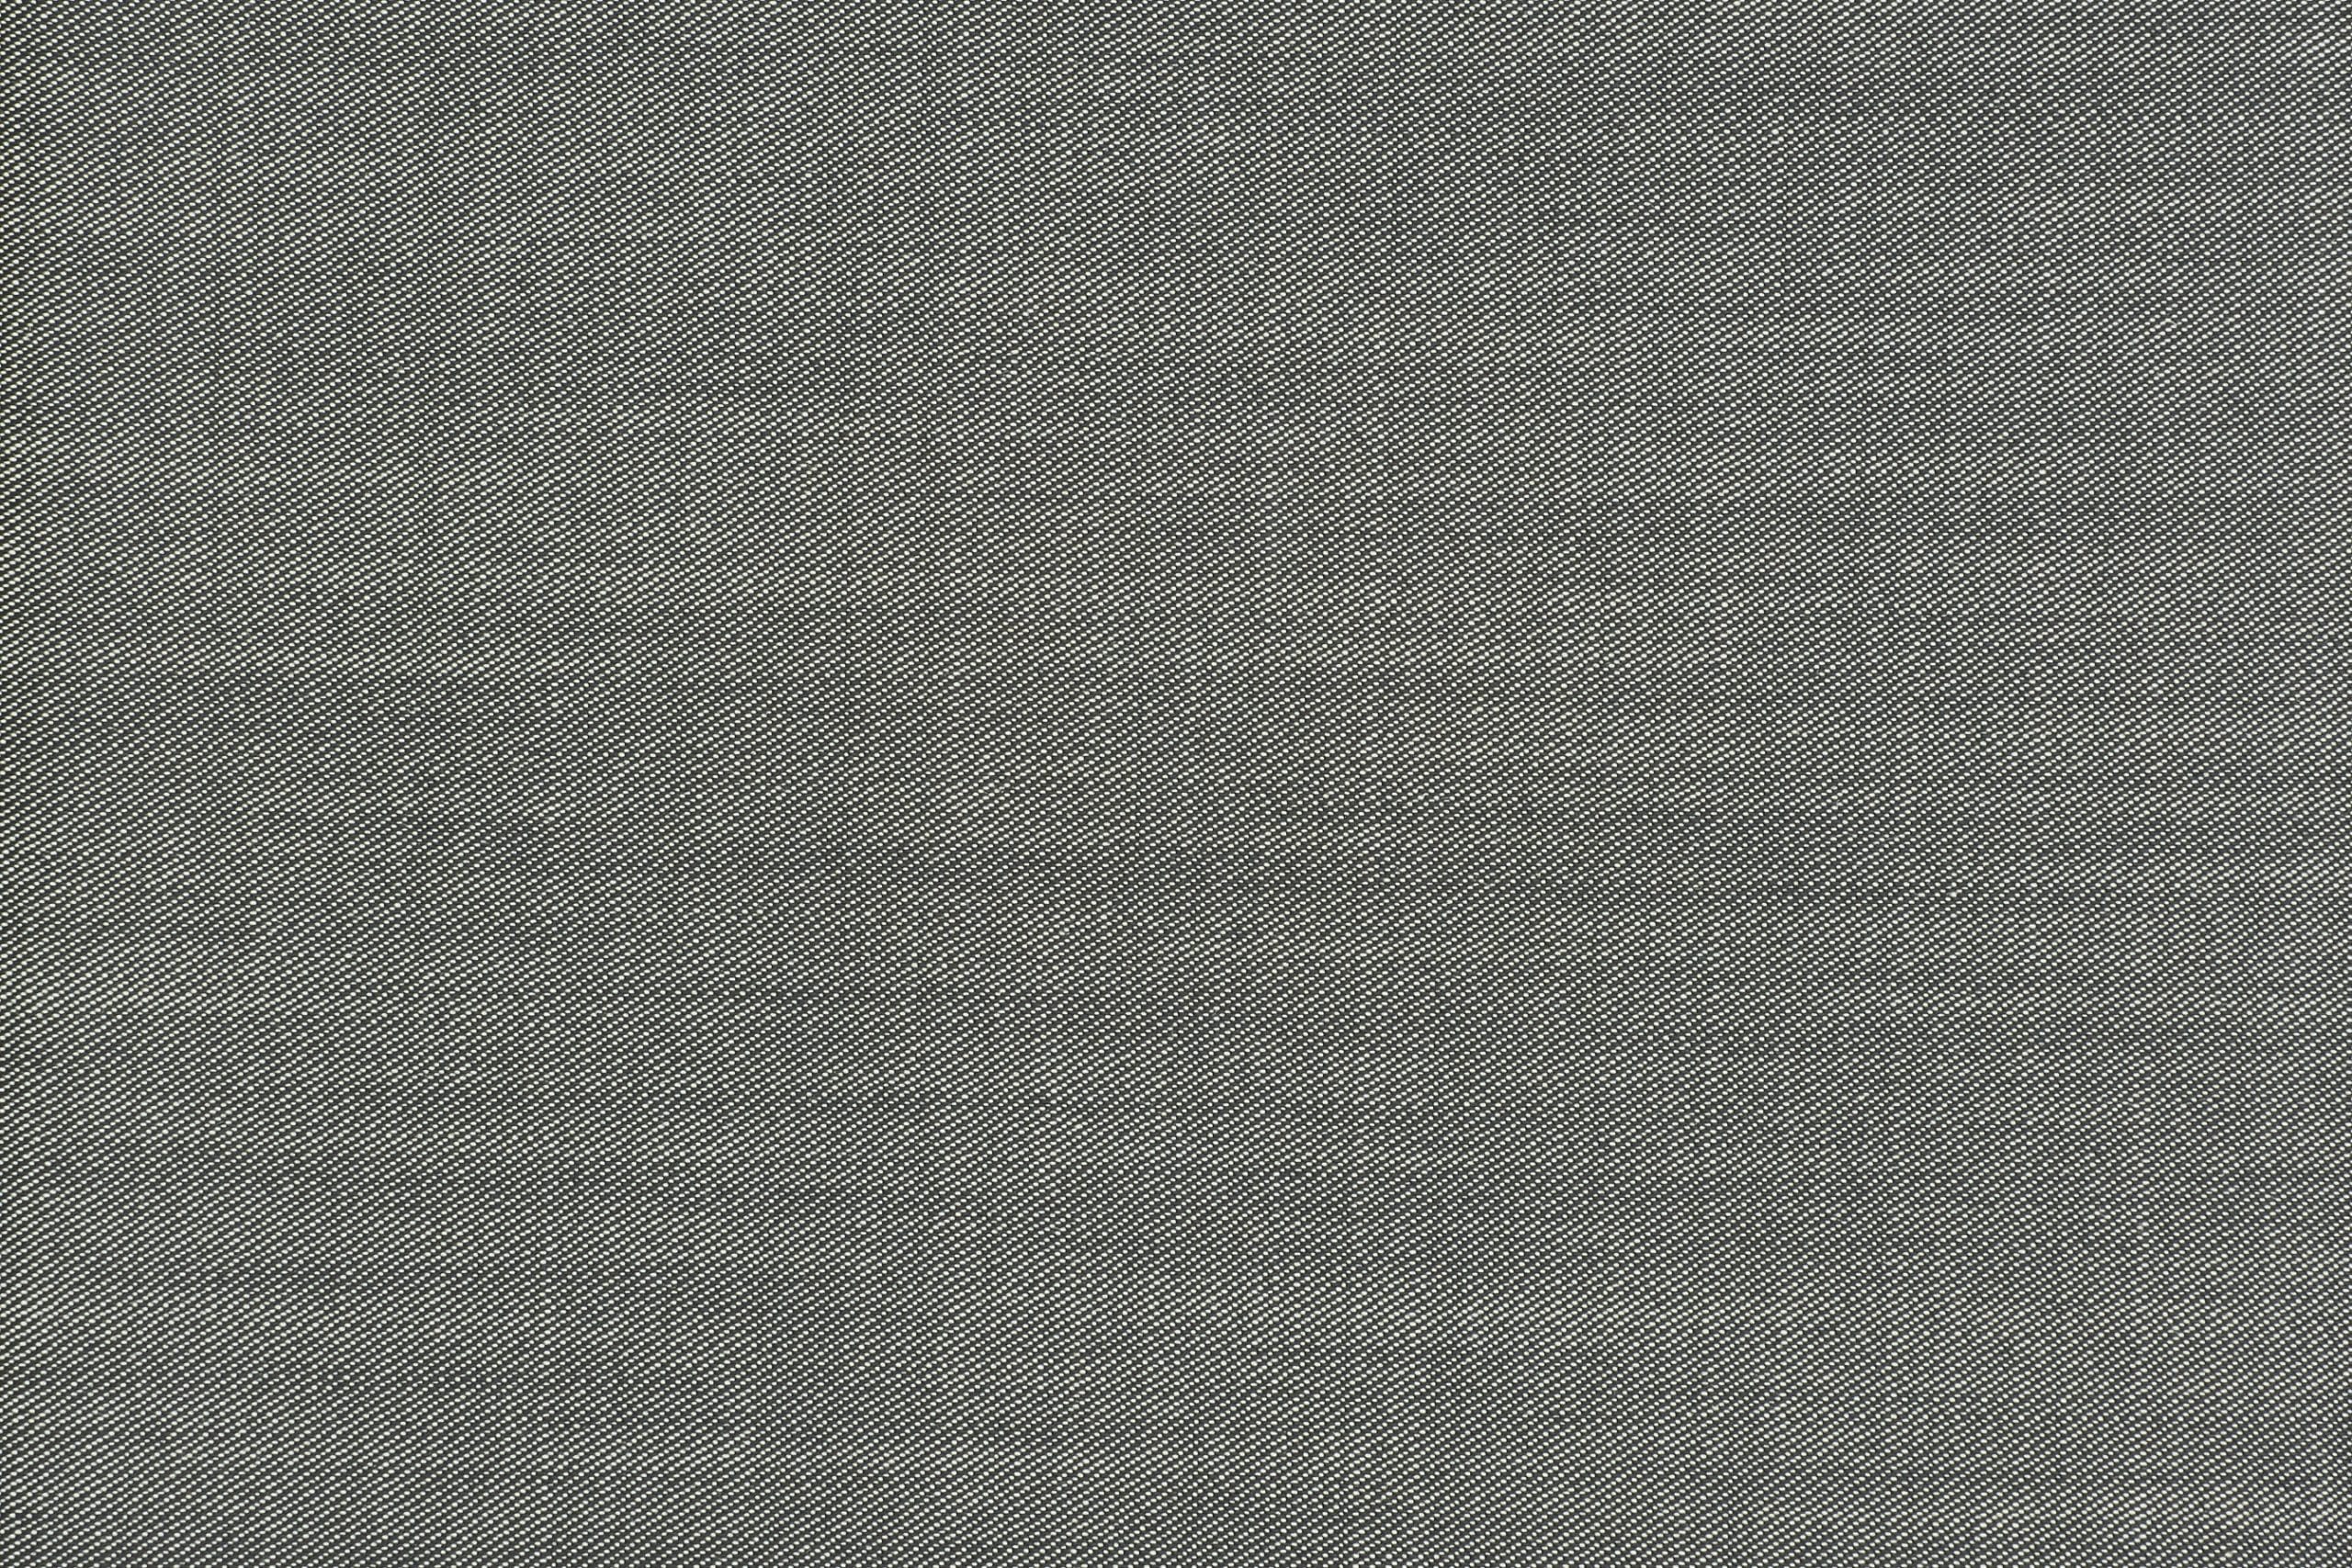 Mondo Fabric for Suits - OP 1821v2 Smoke Grey